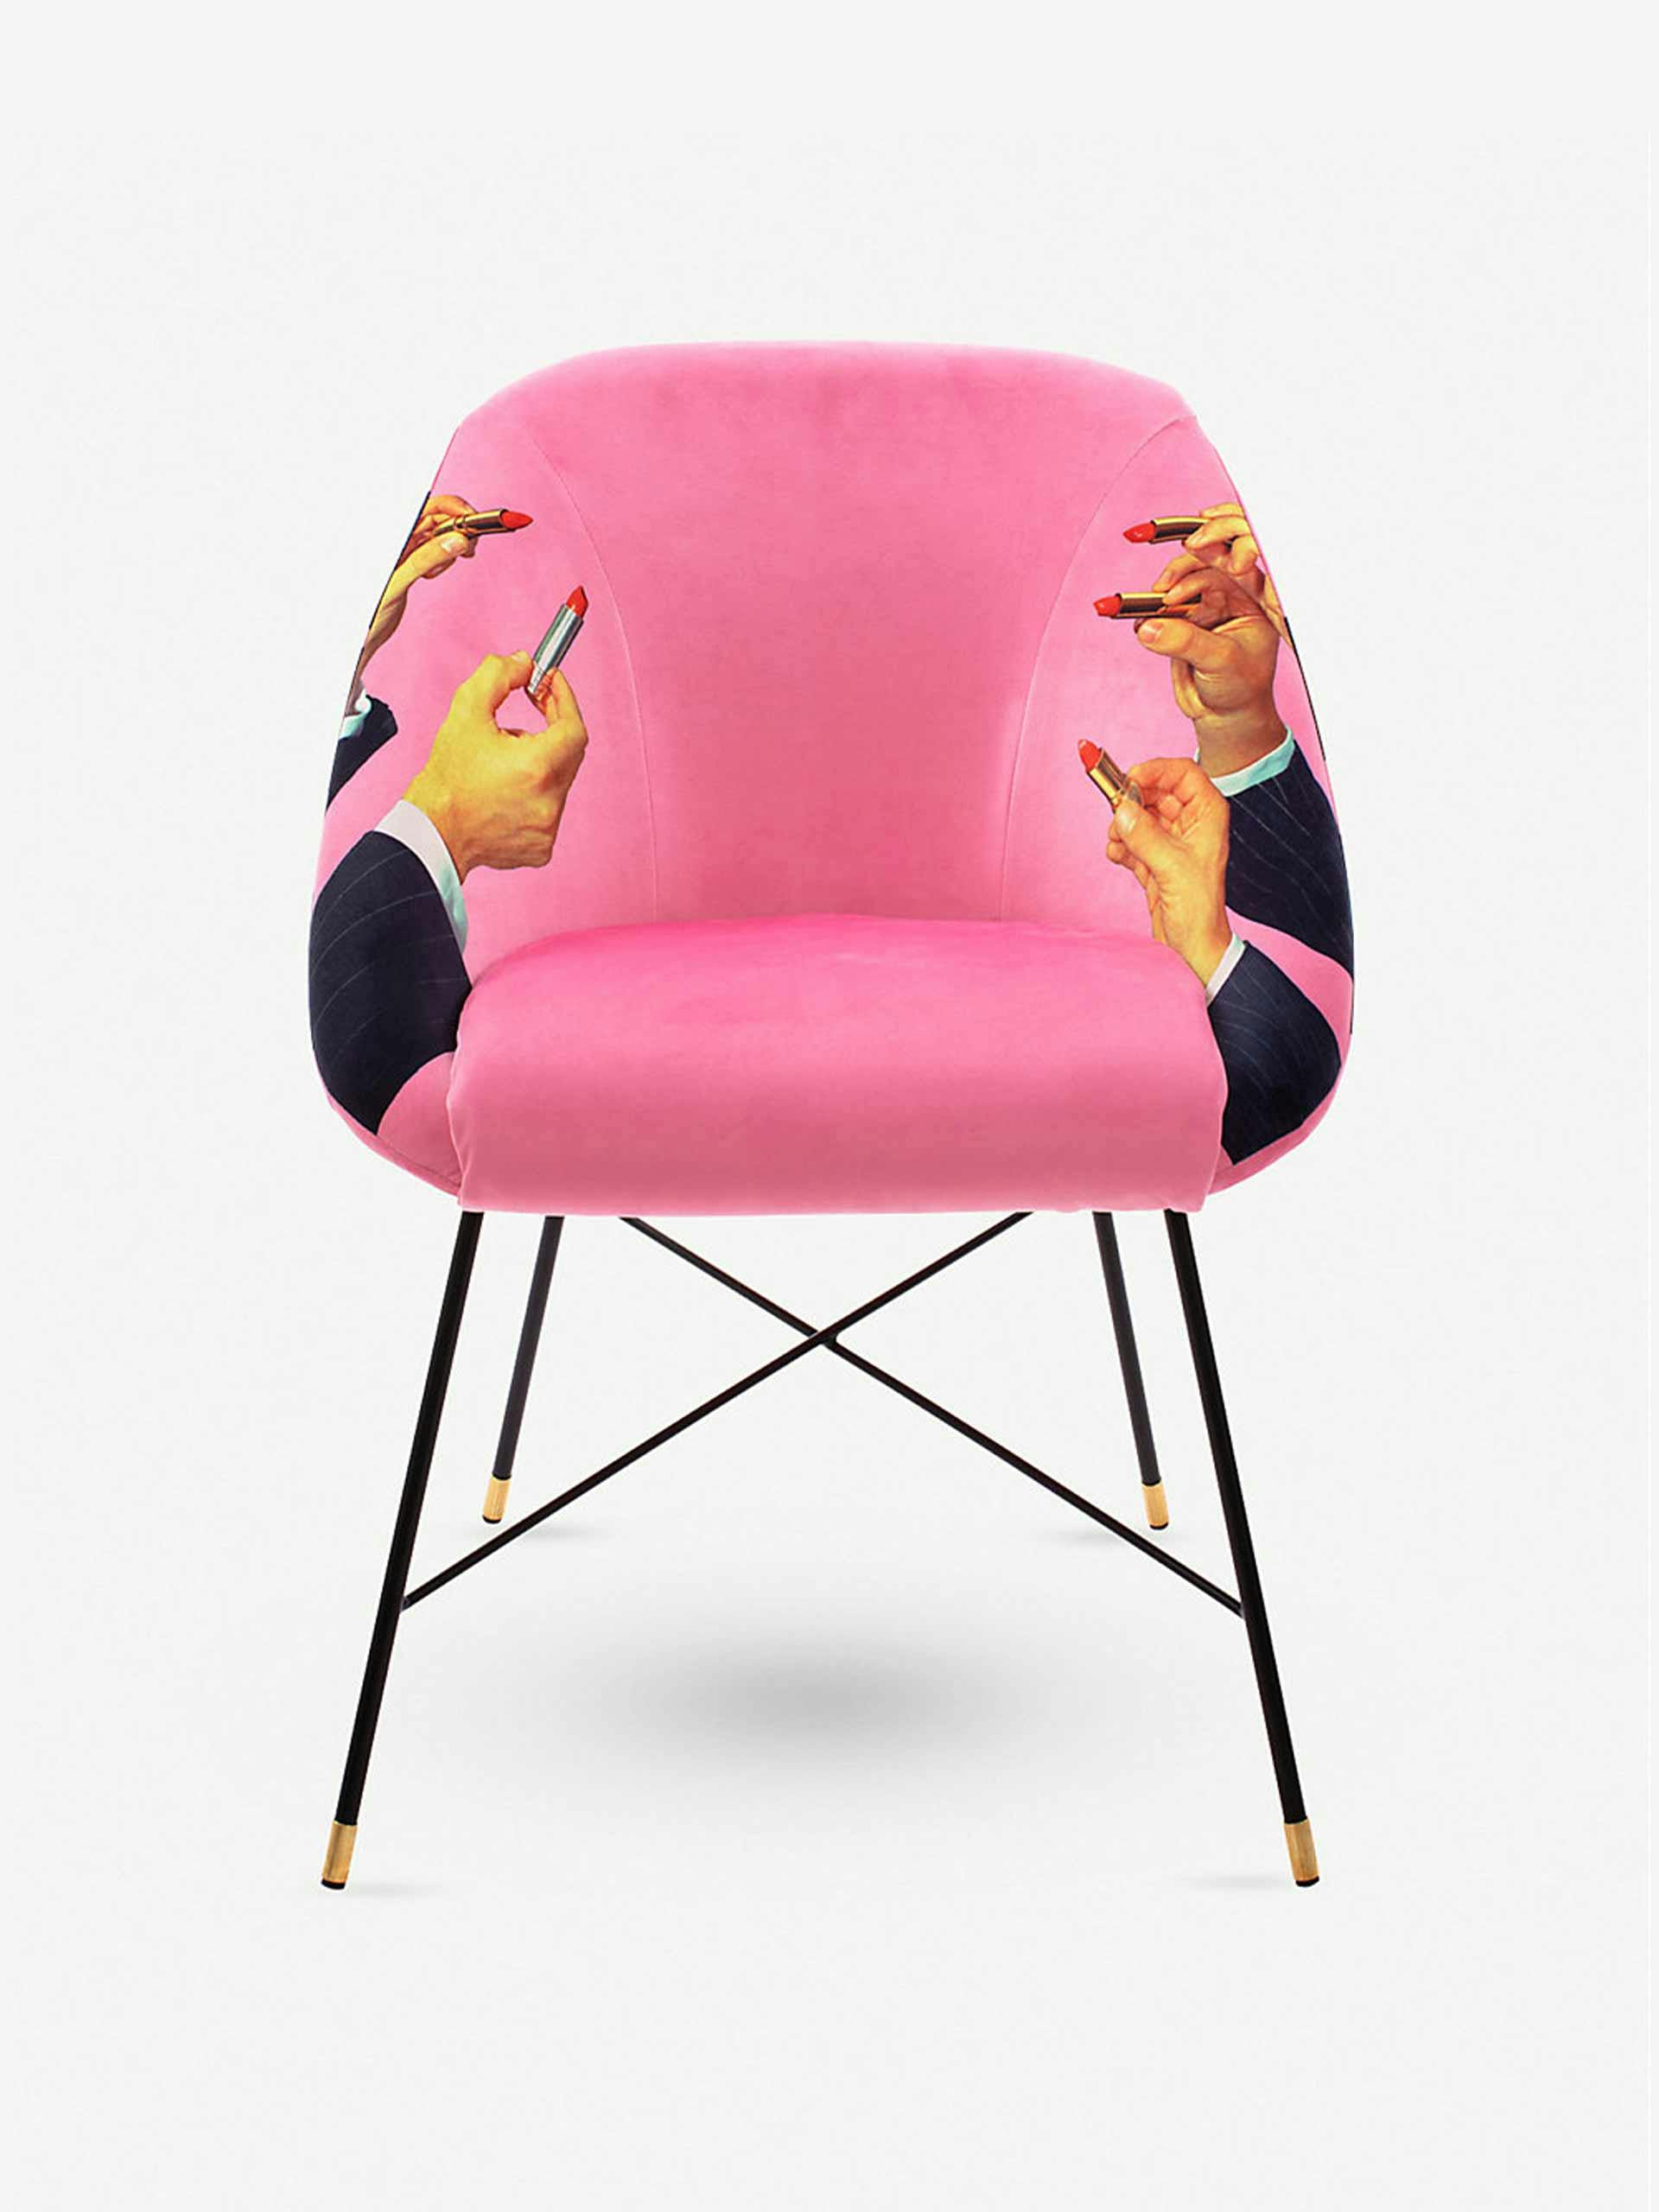 Pink lipstick print chair